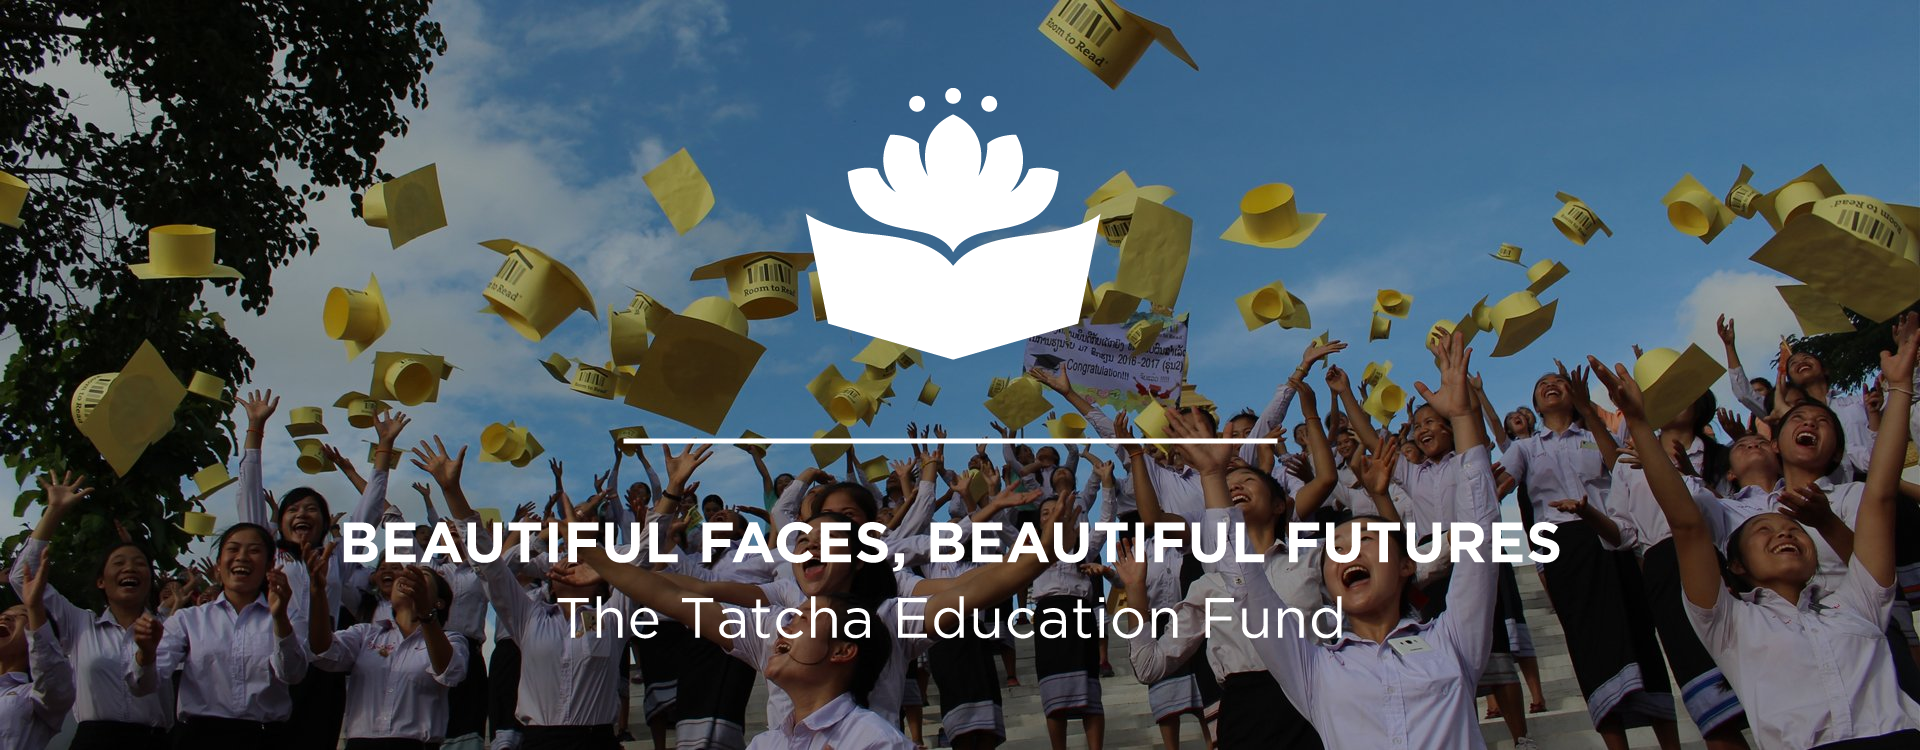 tatcha-education-fund-desktop.png